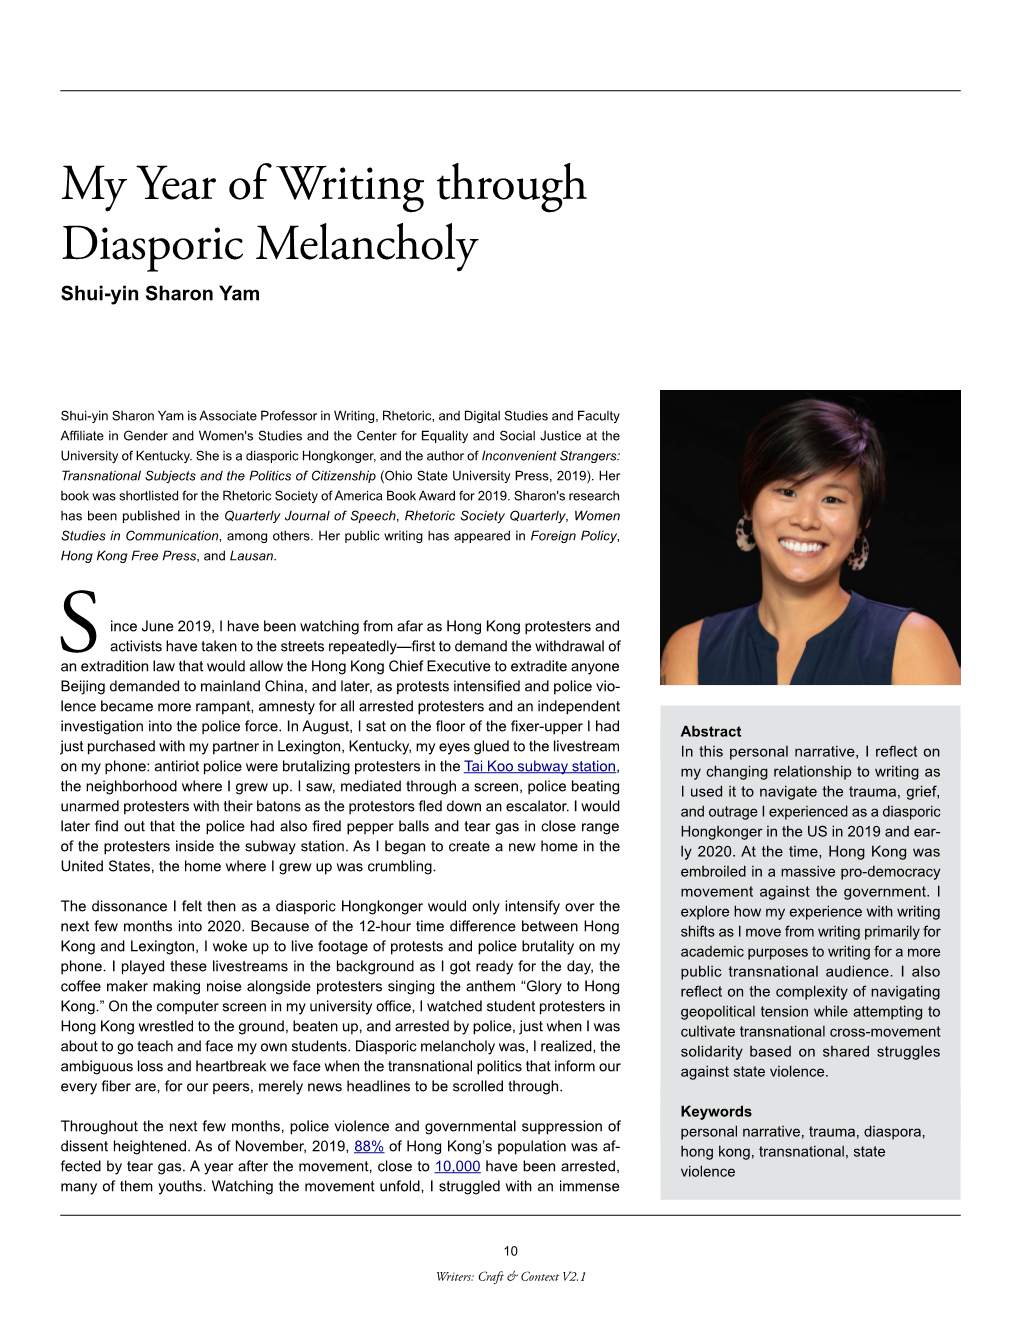 My Year of Writing Through Diasporic Melancholy Shui-Yin Sharon Yam